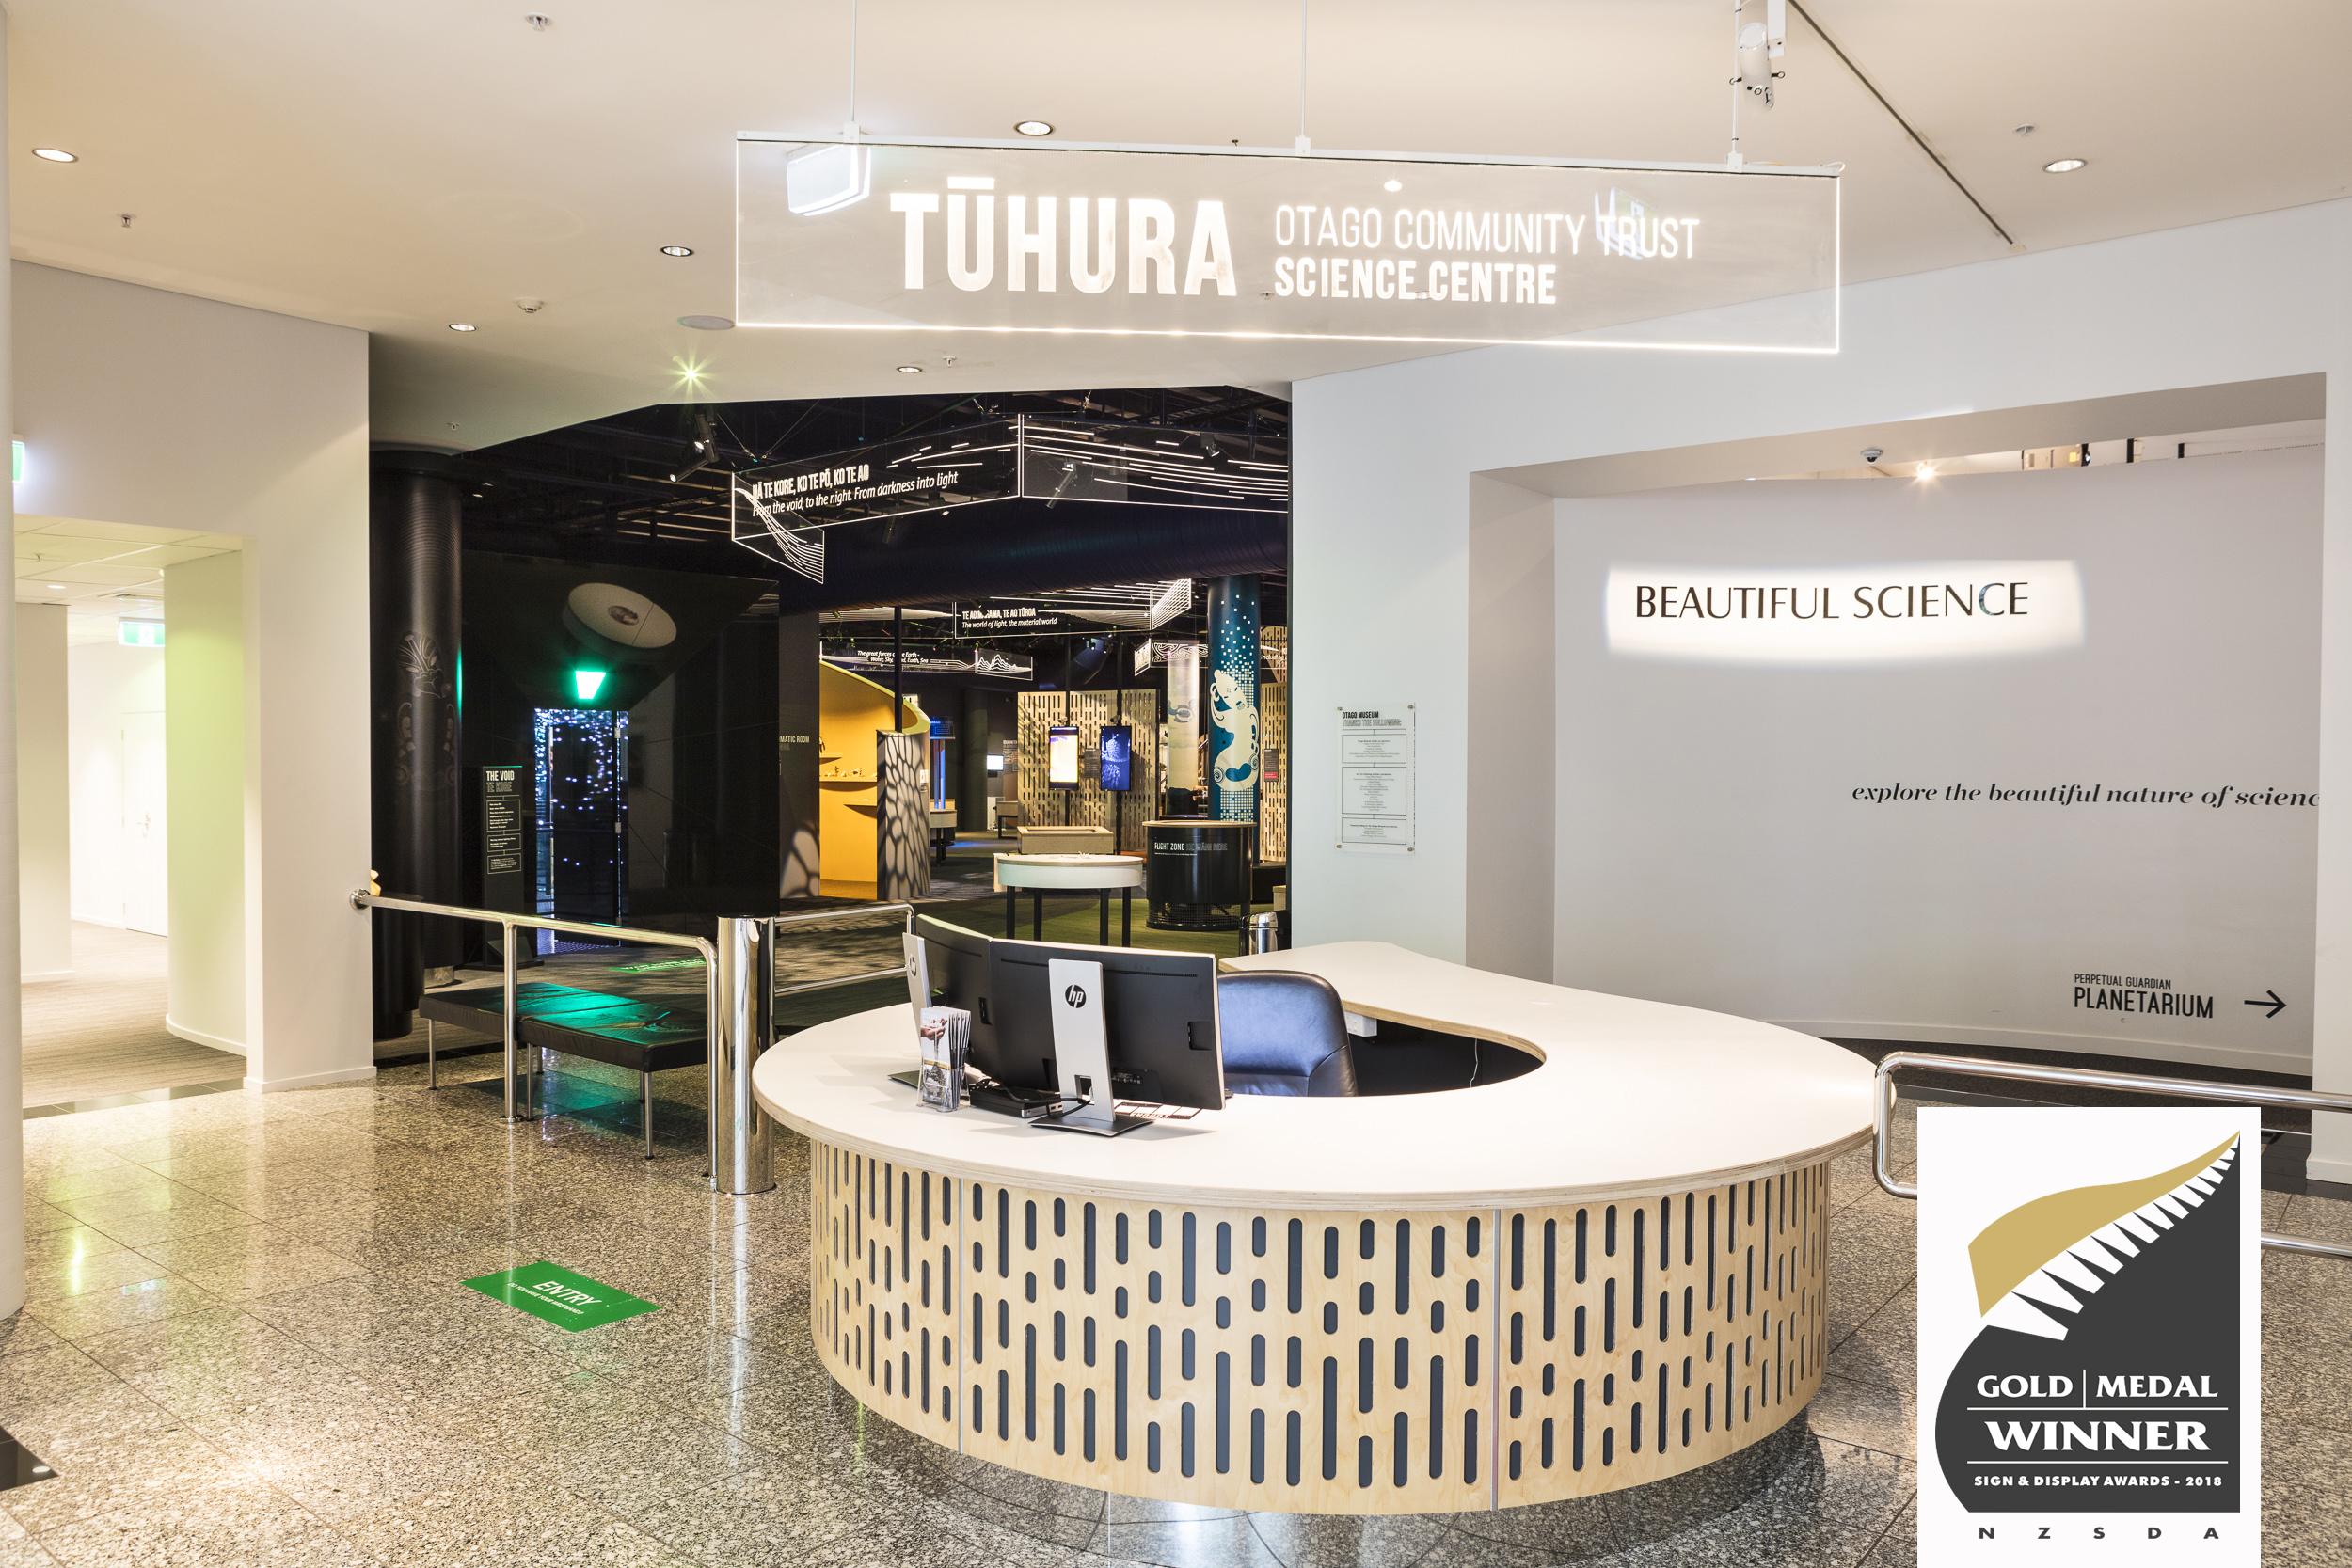 NZSDA Award winning Illuminated signage Tuhura Science Centre thumbnail